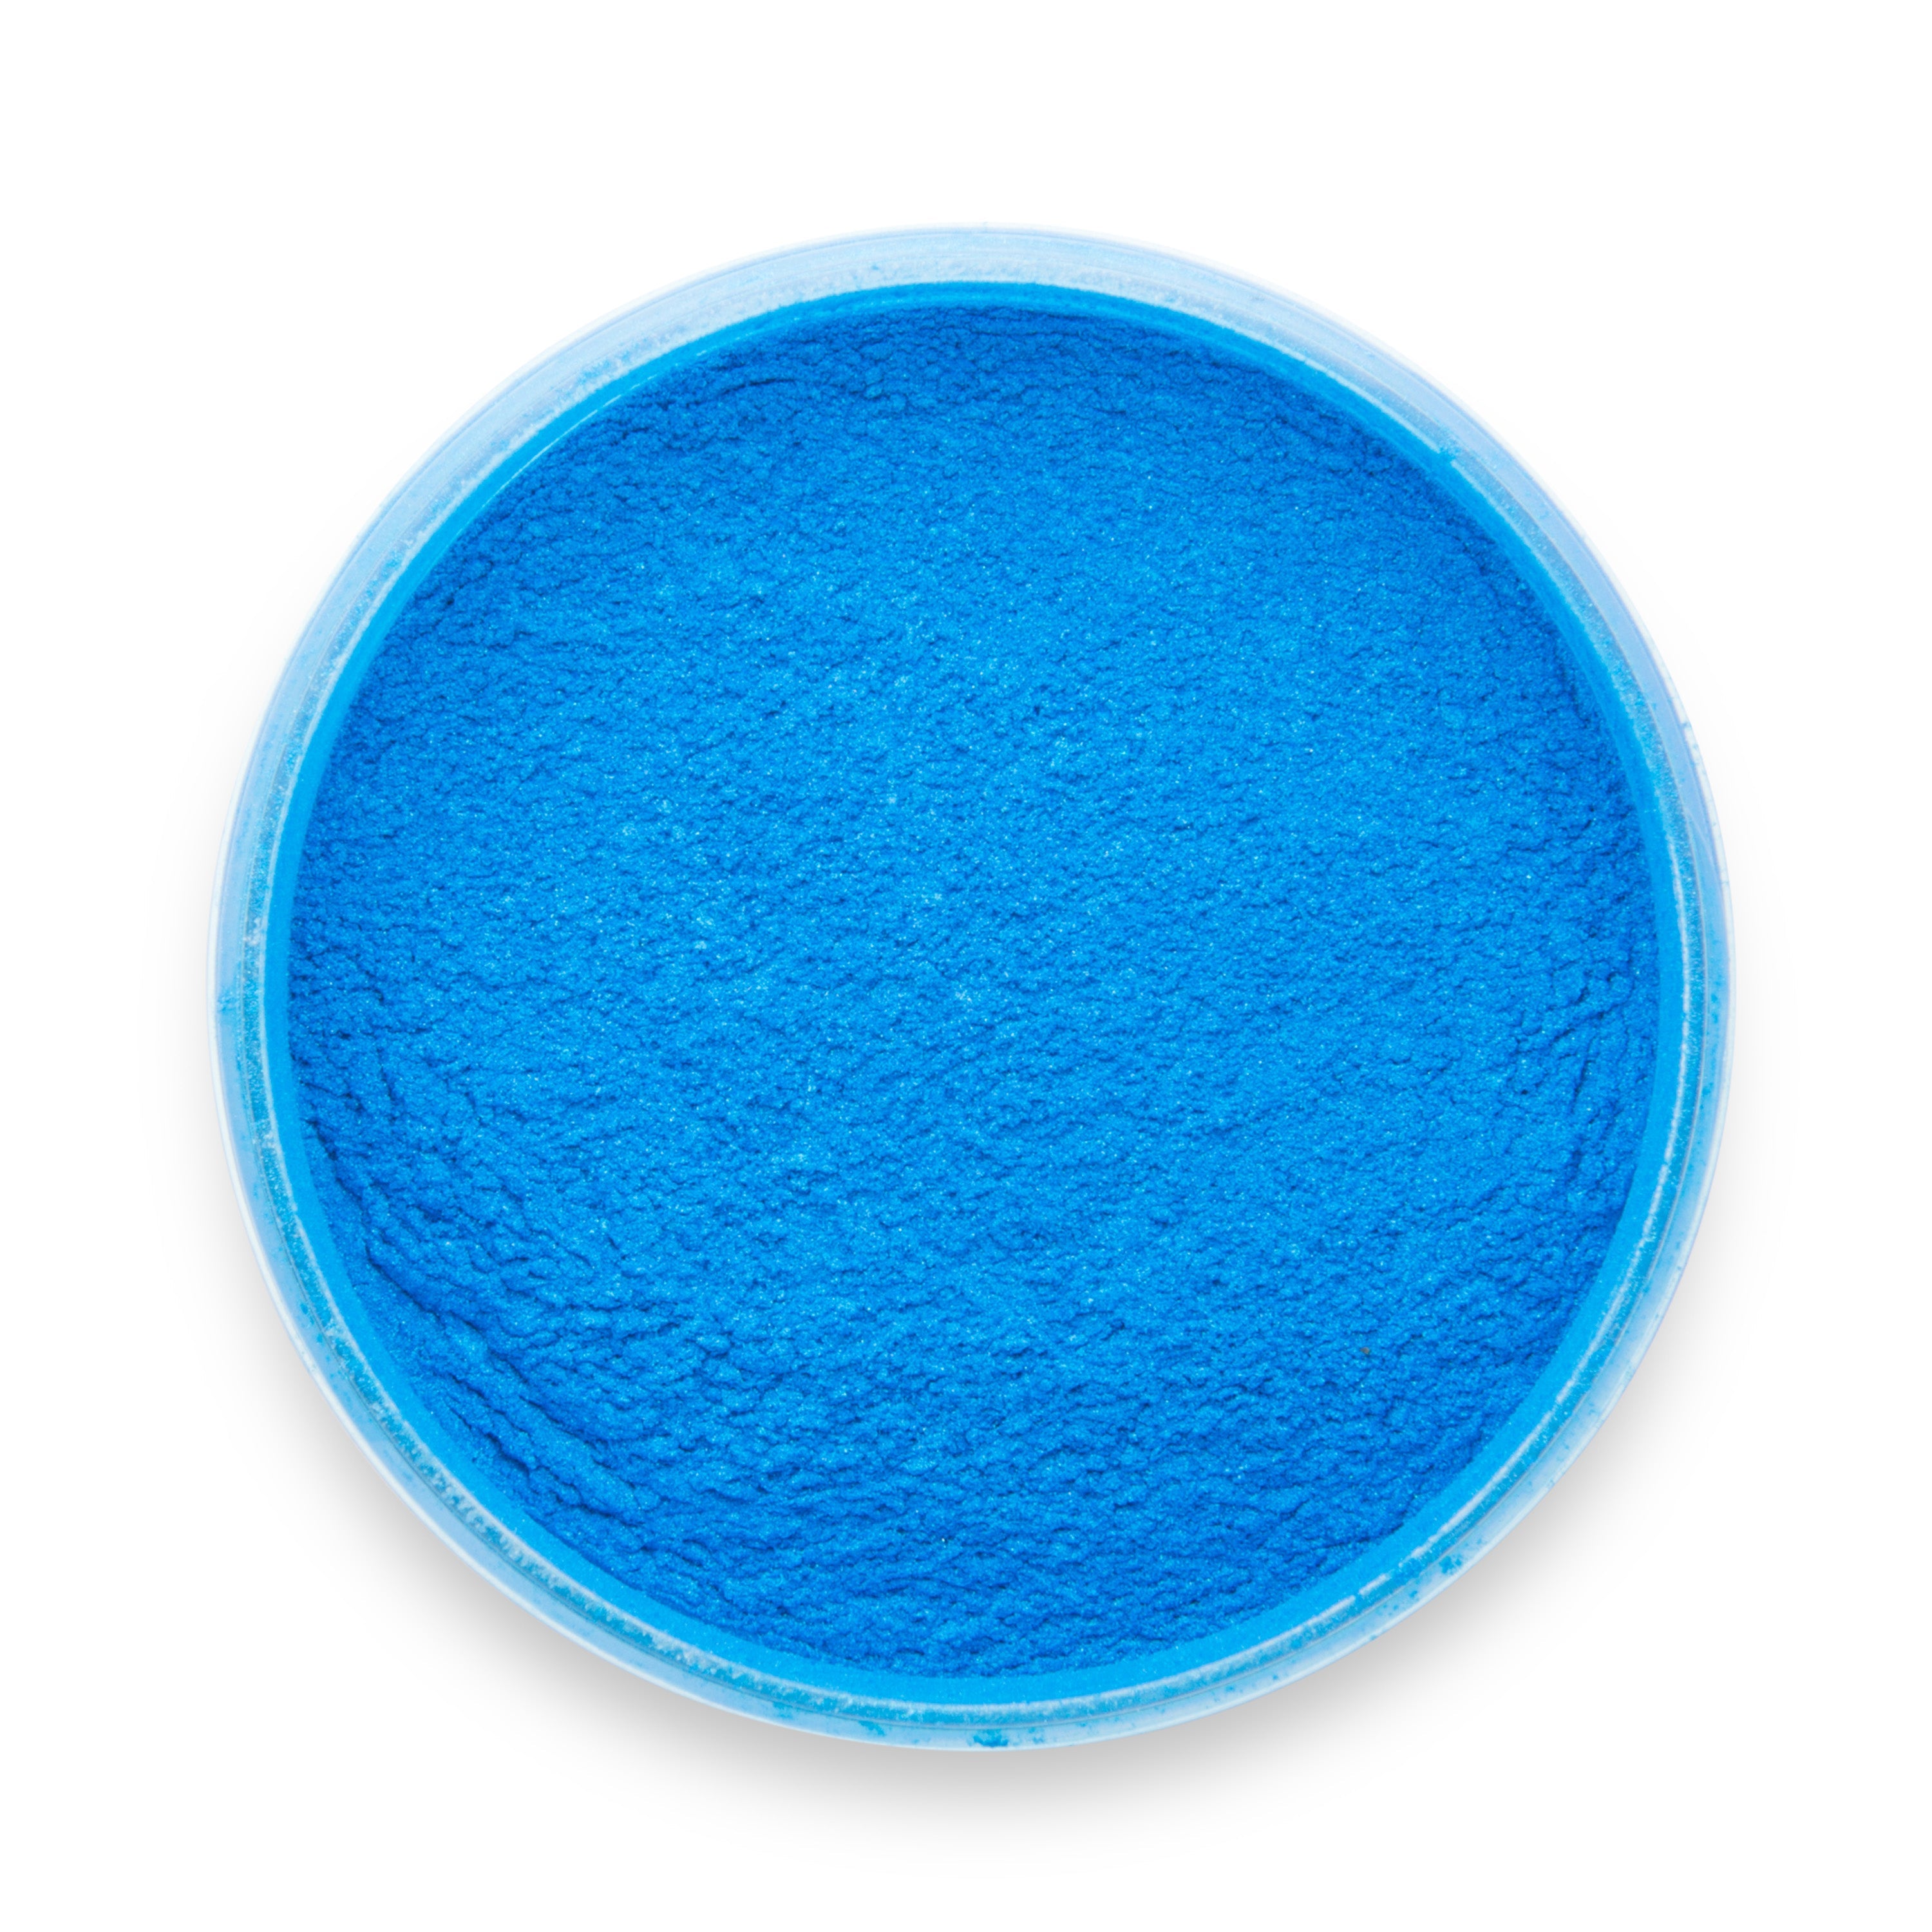 Real Royal Blue Epoxy Powder Pigment